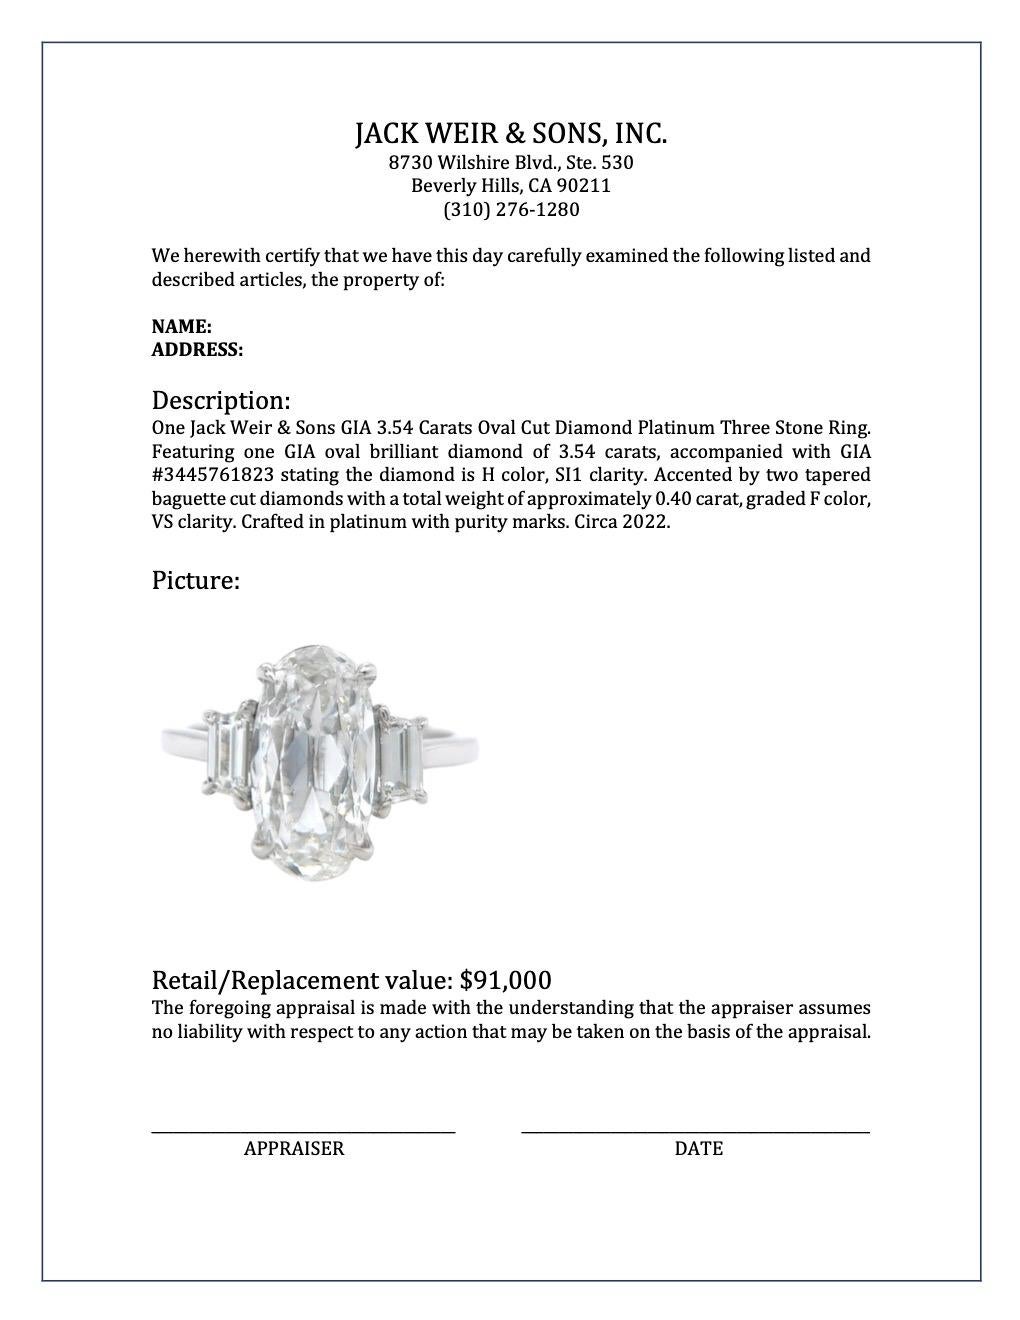 Jack Weir & Sons GIA 3.54 Carats Oval Cut Diamond Platinum Three Stone Ring 4